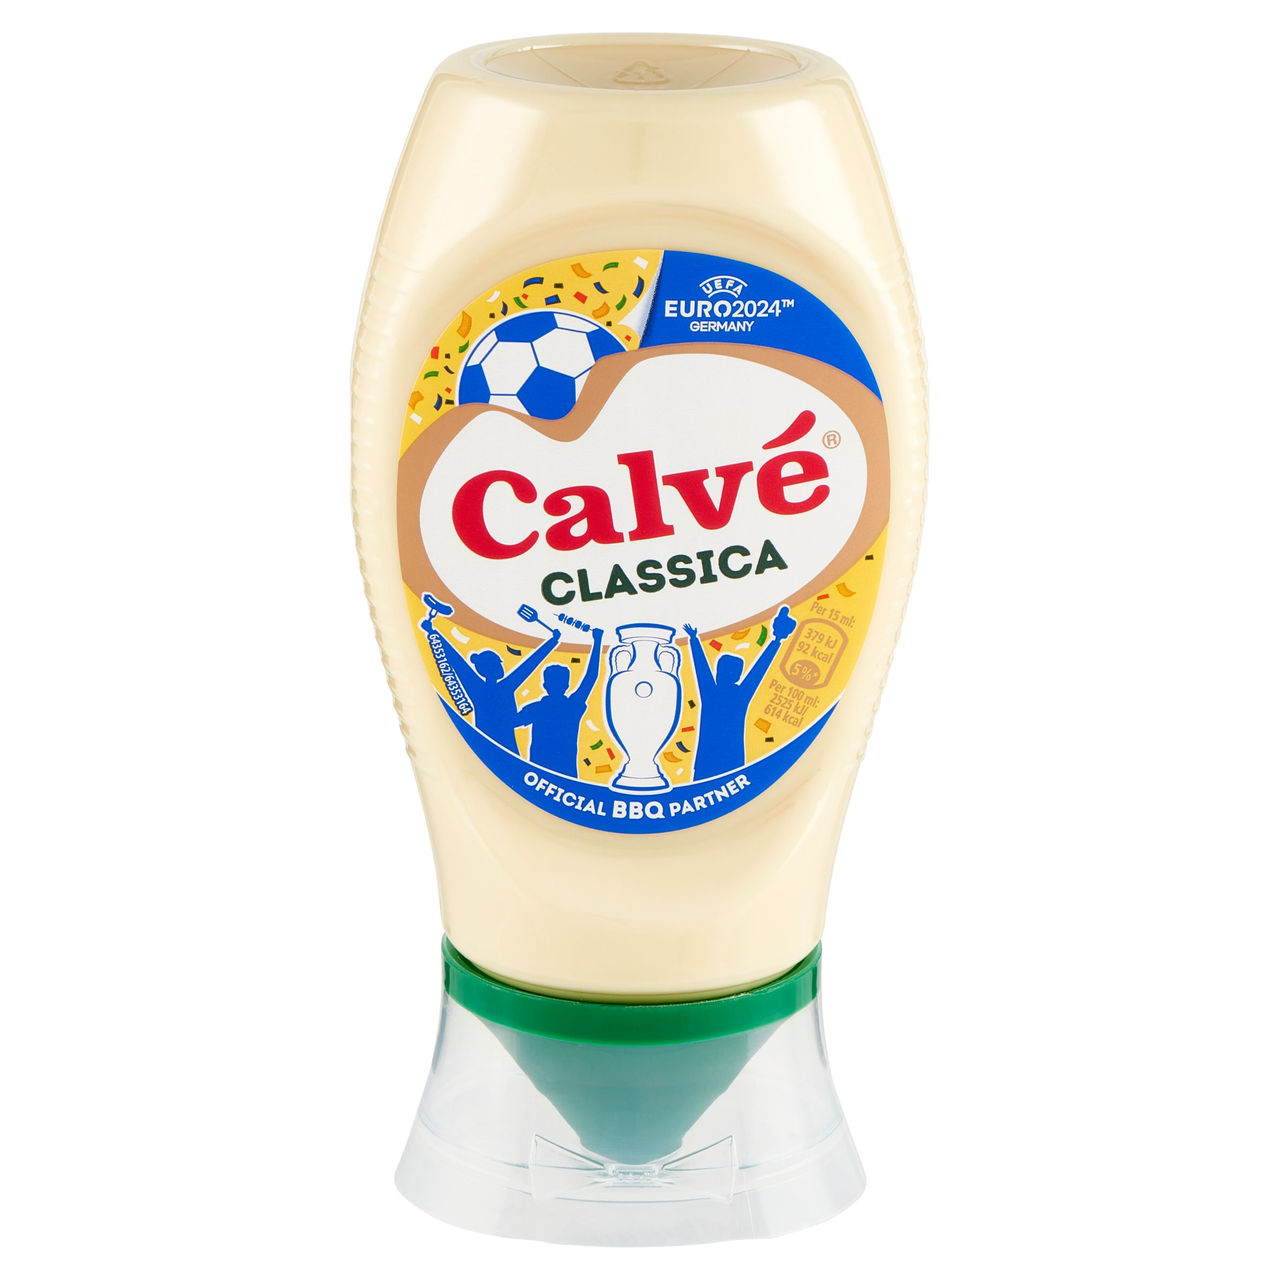 Calvé Classica 250 ml